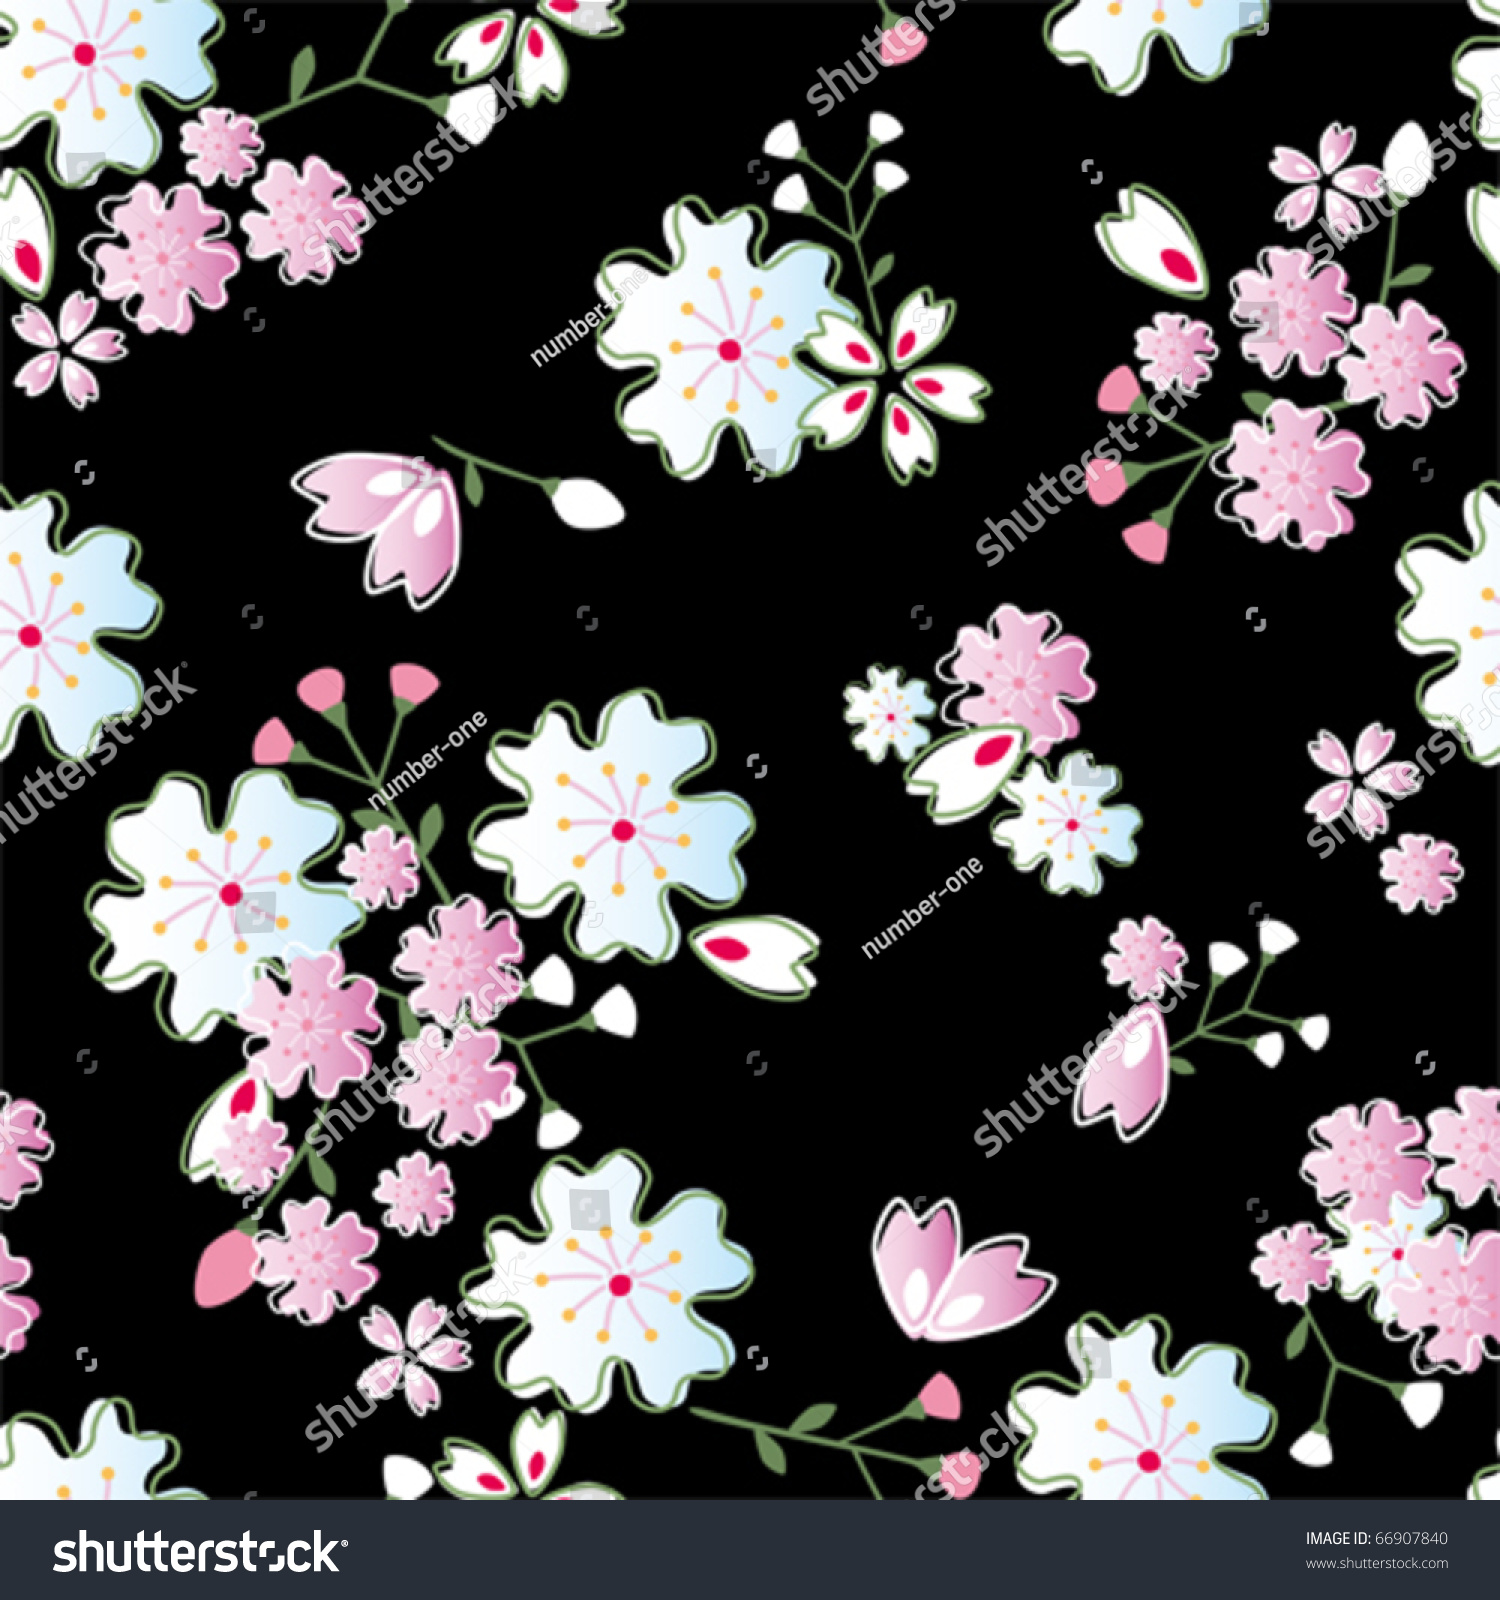 Seamless Japanese Blossoms Pattern. Illustration Vector. - 66907840 ...